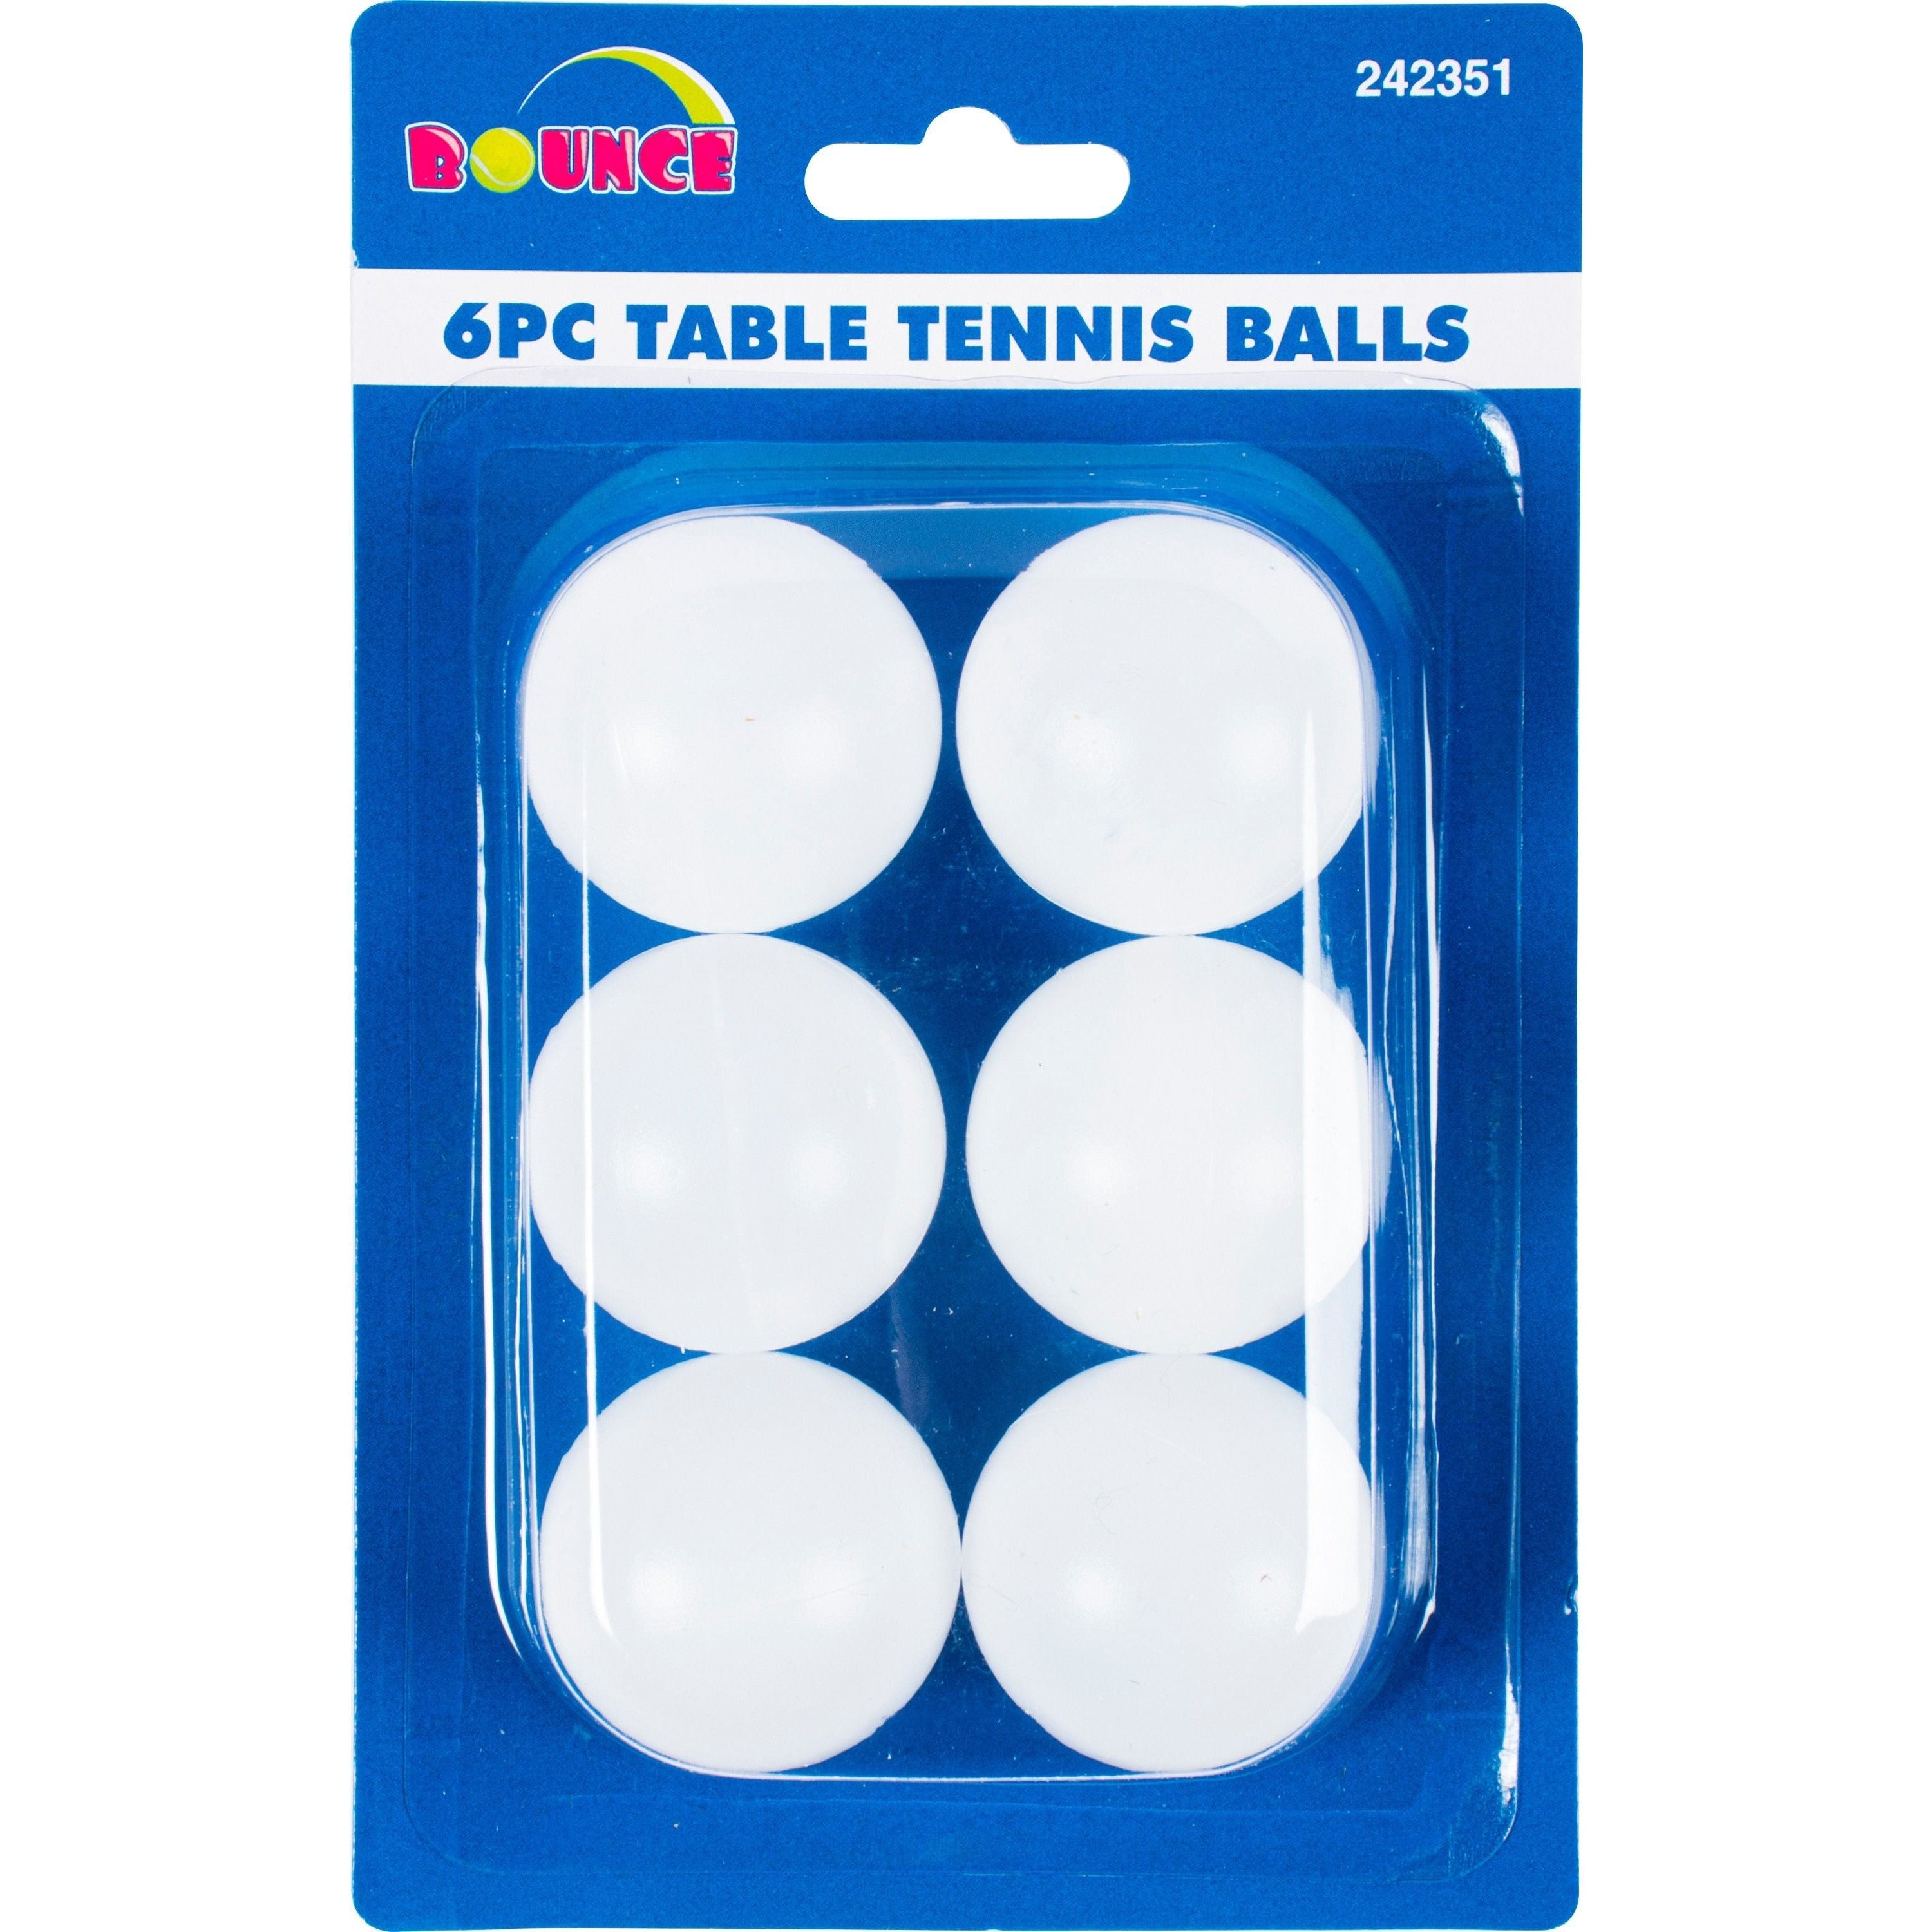 Table Tennis Balls - Dollars and Sense